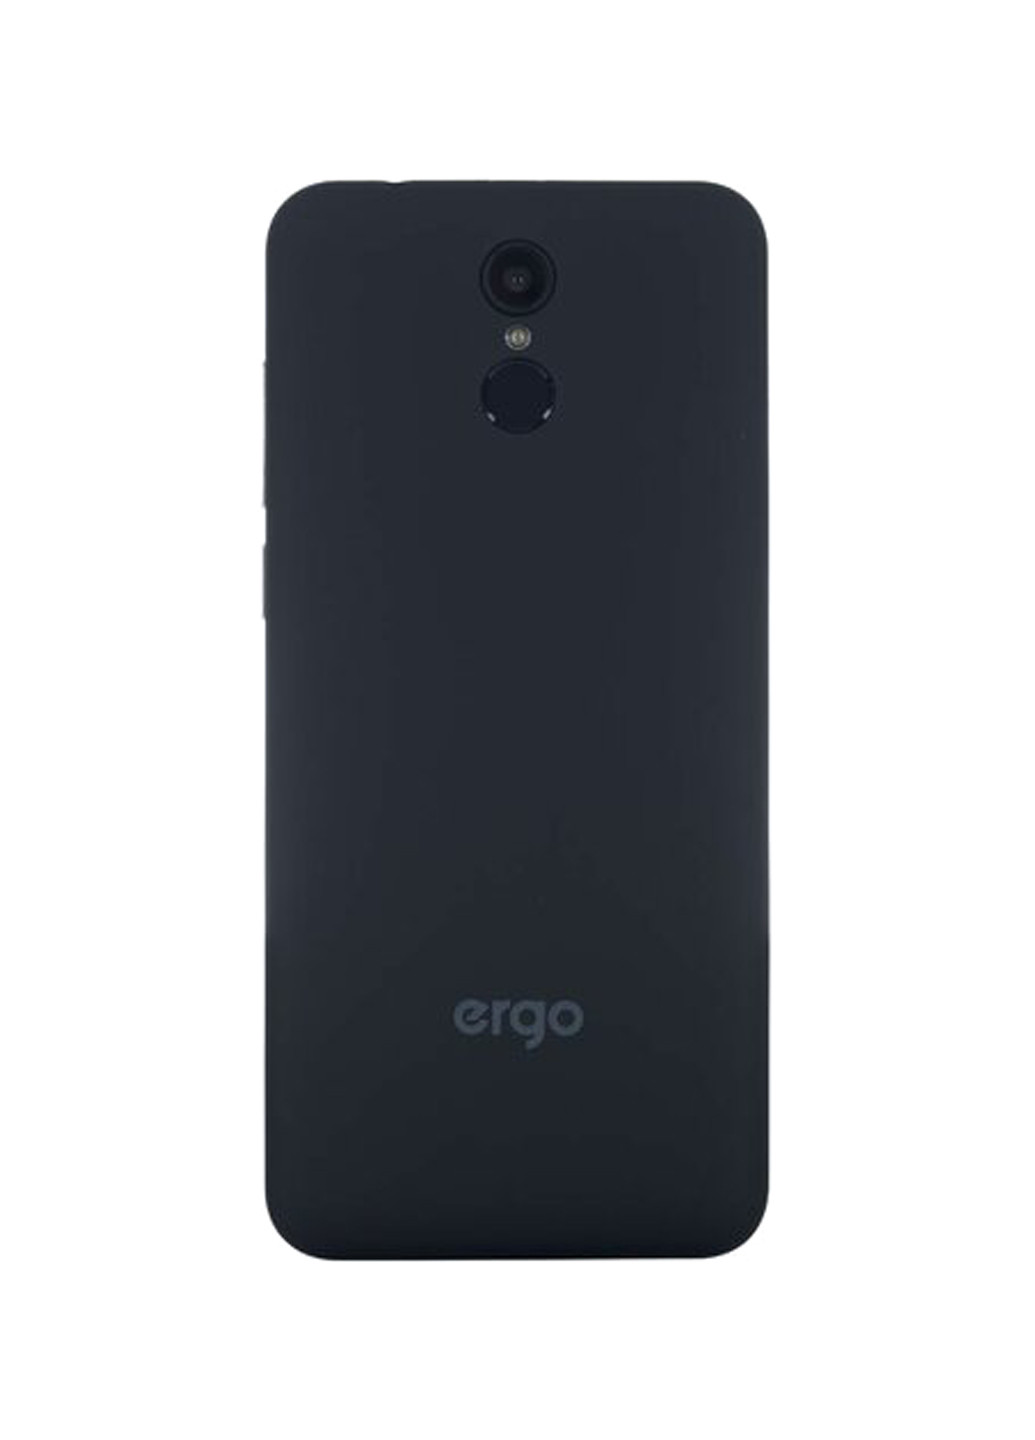 Смартфон Ergo v540 level 2/16gb black (133442588)